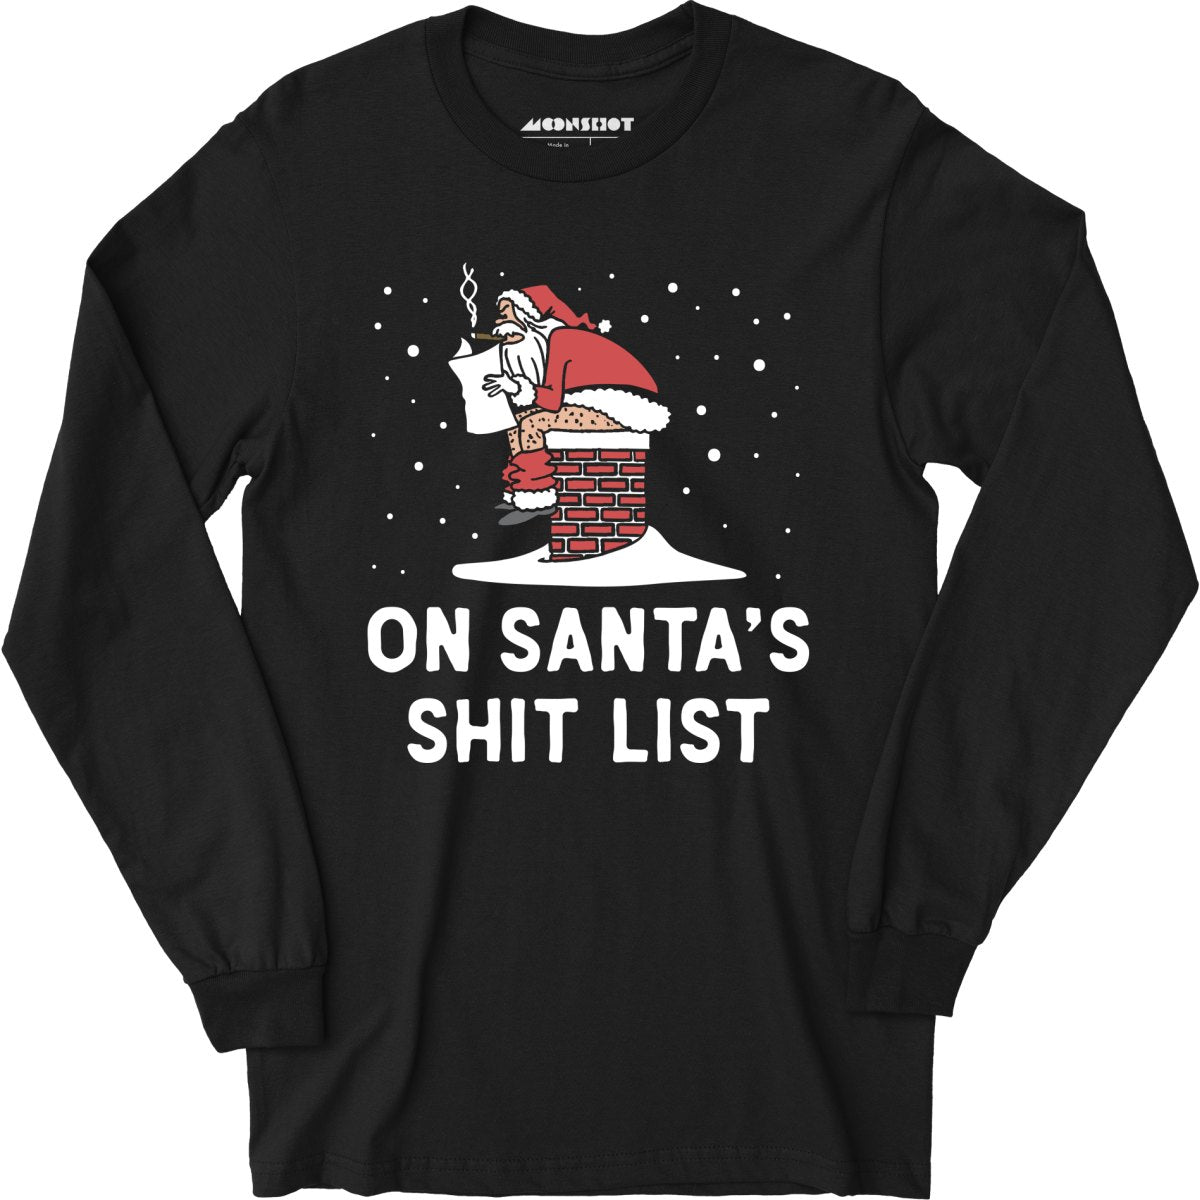 On Santa's Shit List - Long Sleeve T-Shirt